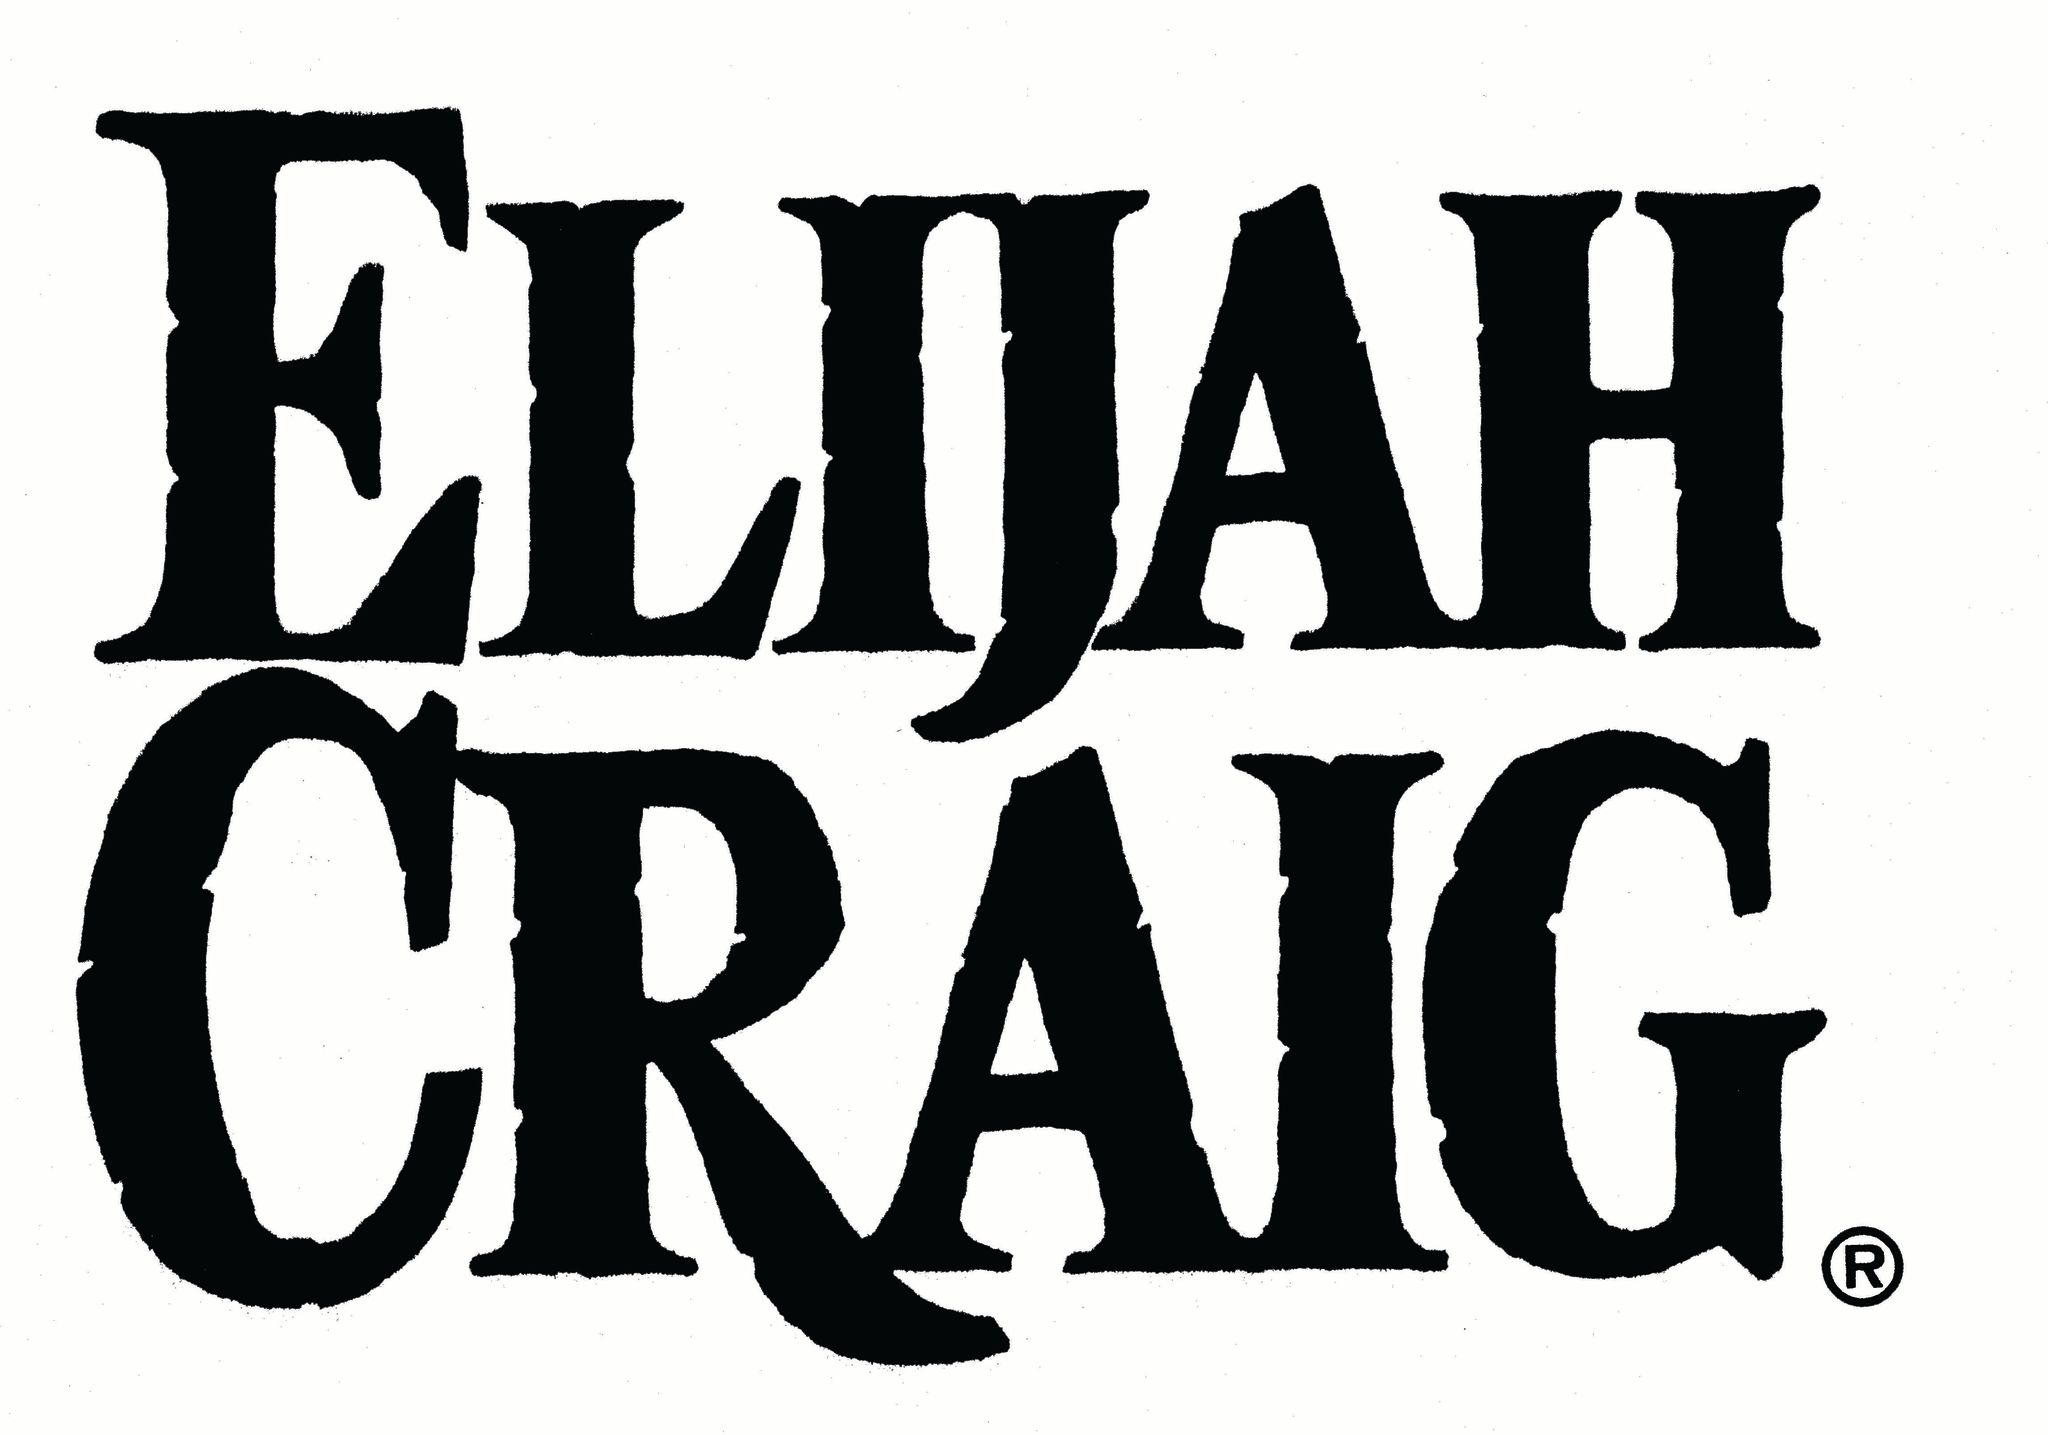 Elijah Craig Small Batch Kentucky Straight Bourbon Whiskey 47%vol. 0,7l